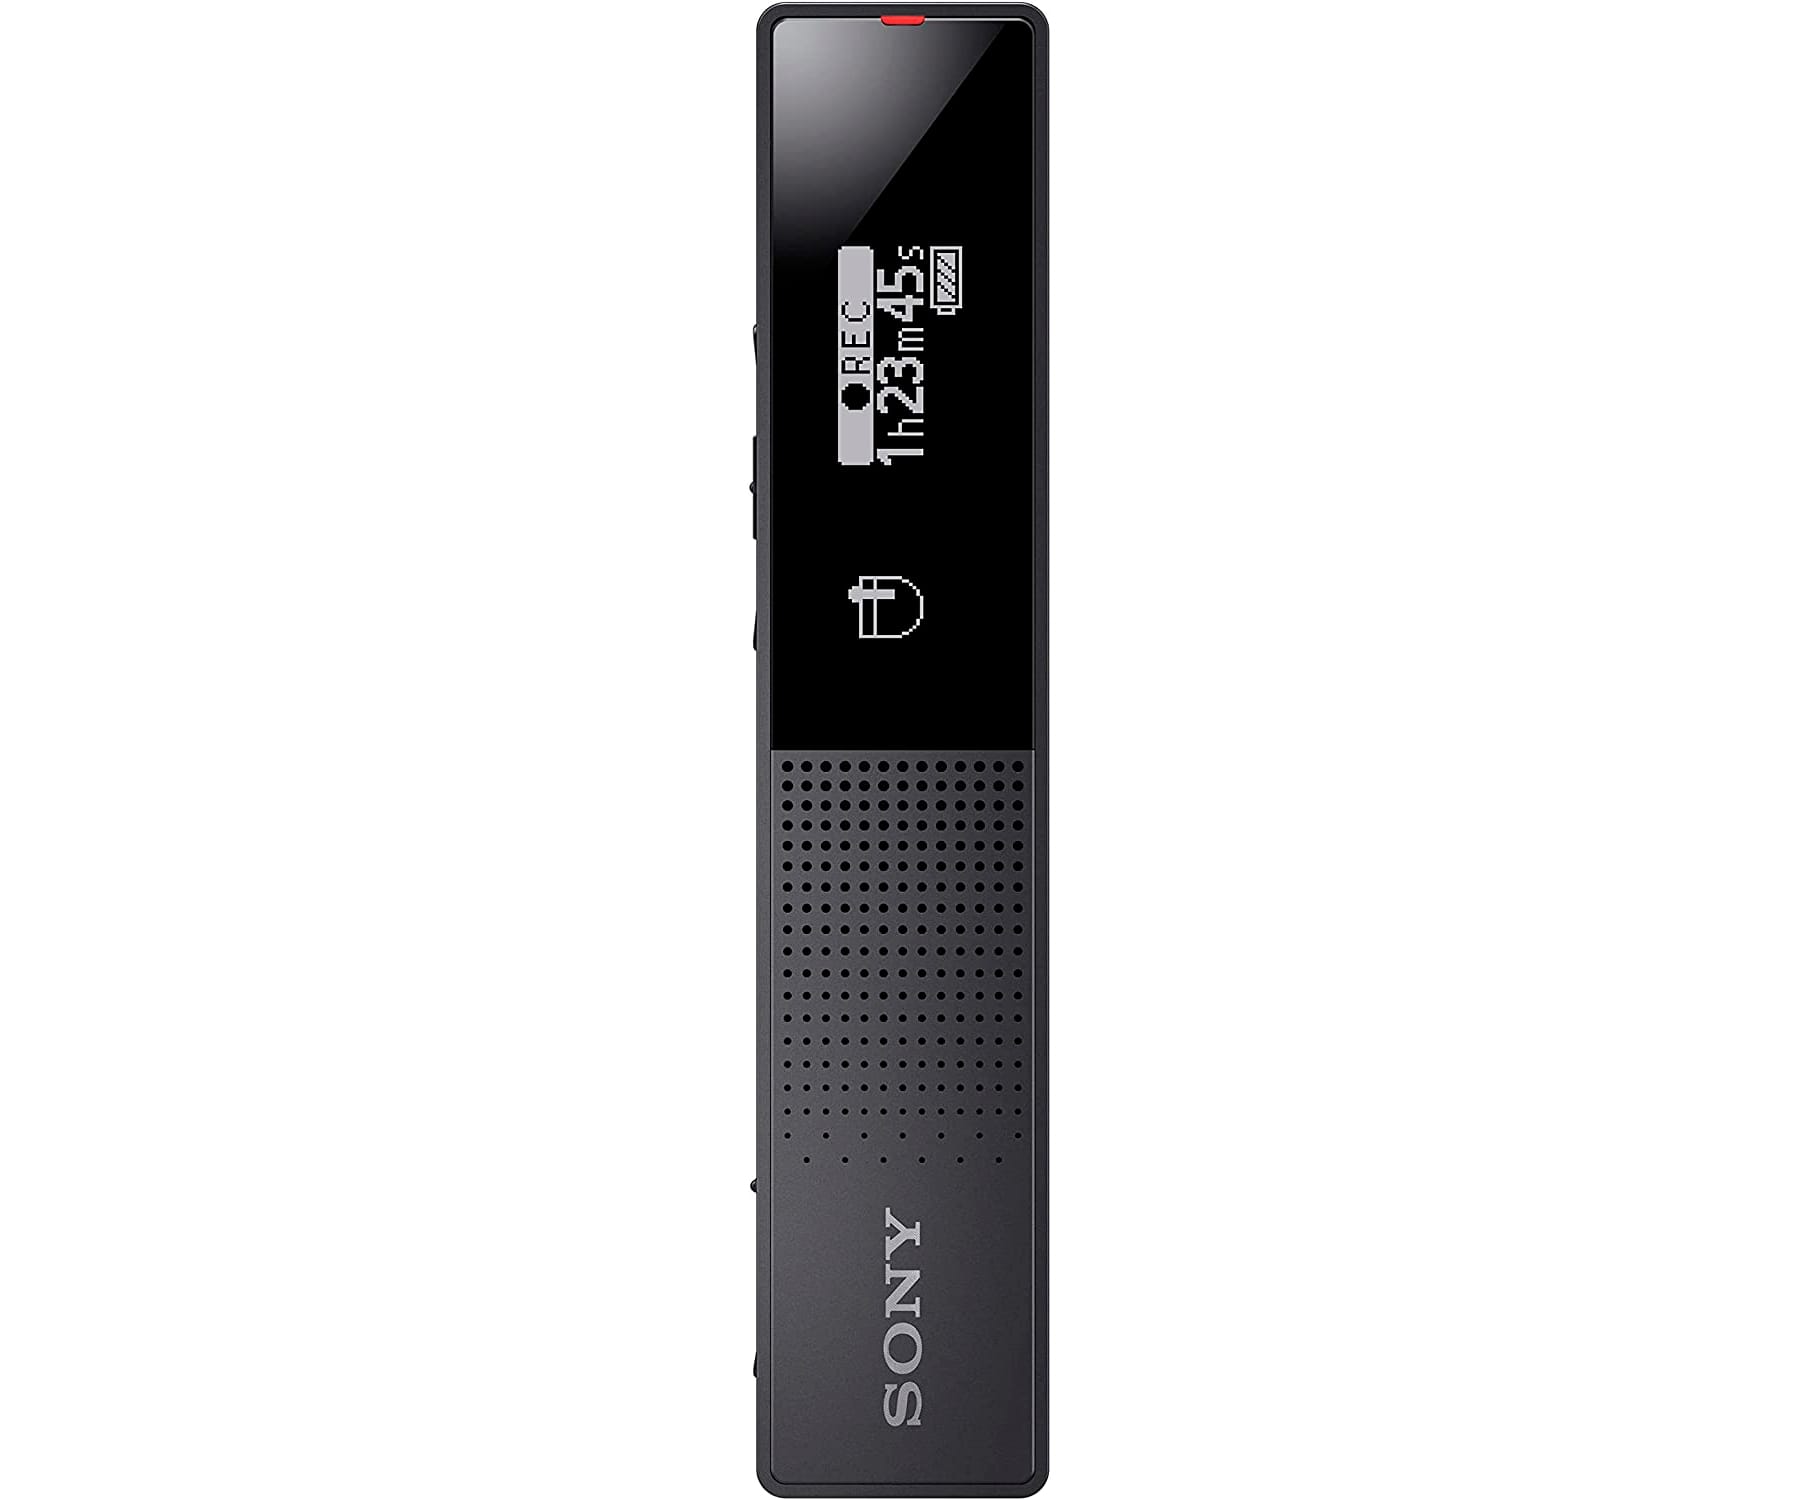 SONY ICD-TX660 BLACK / GRABADORA DE VOZ DIGITAL OLED 16GB